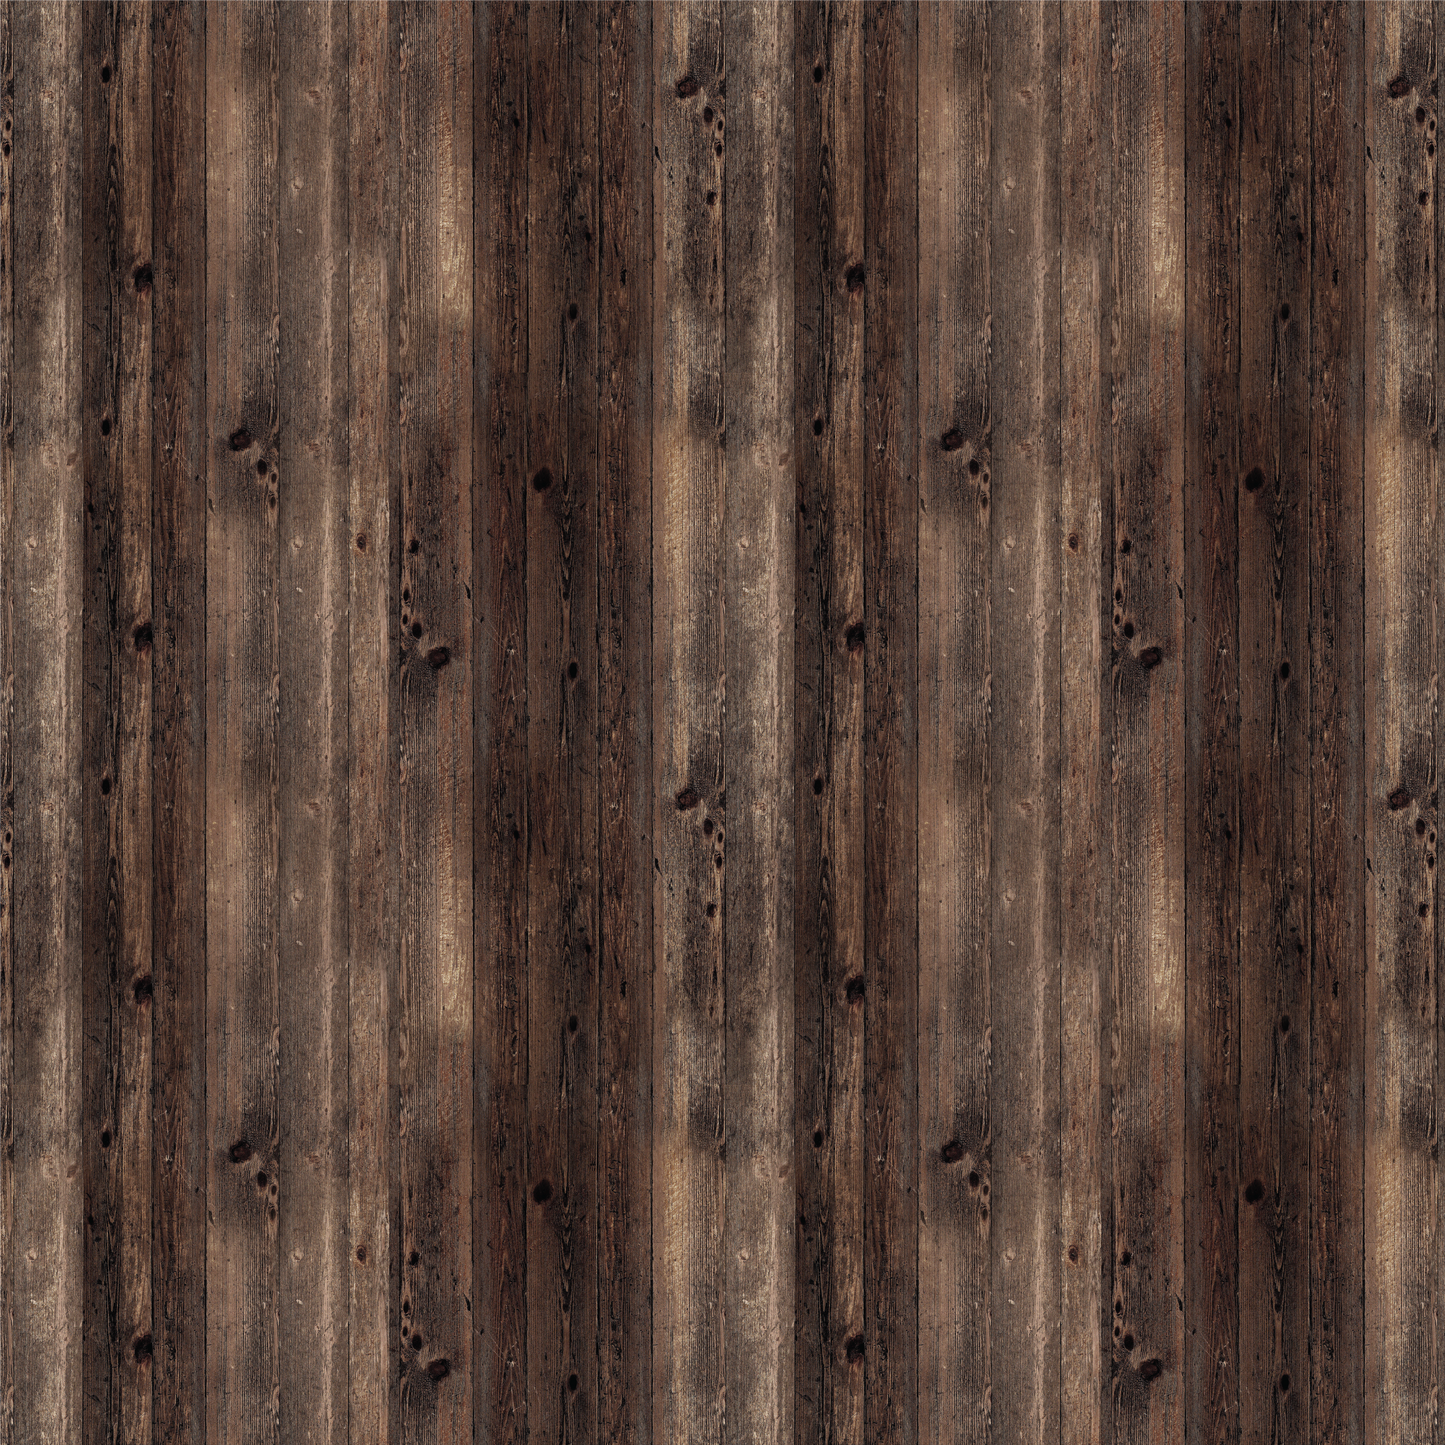 Wooden Boards 002